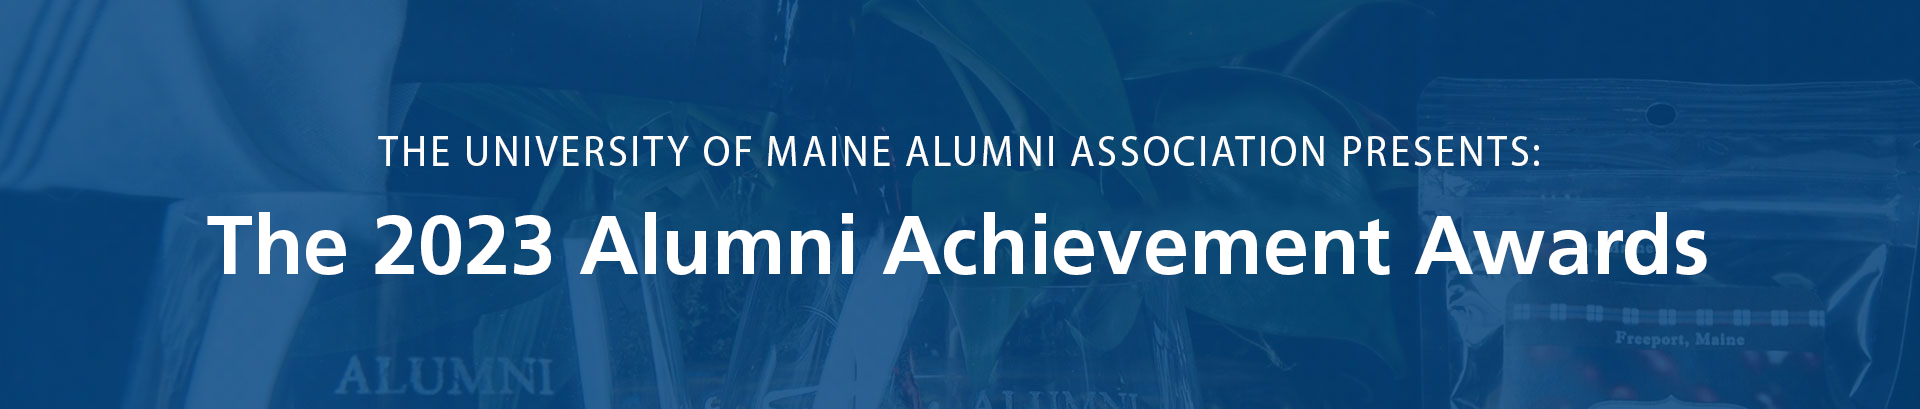 The 2023 Alumni Achievement Awards